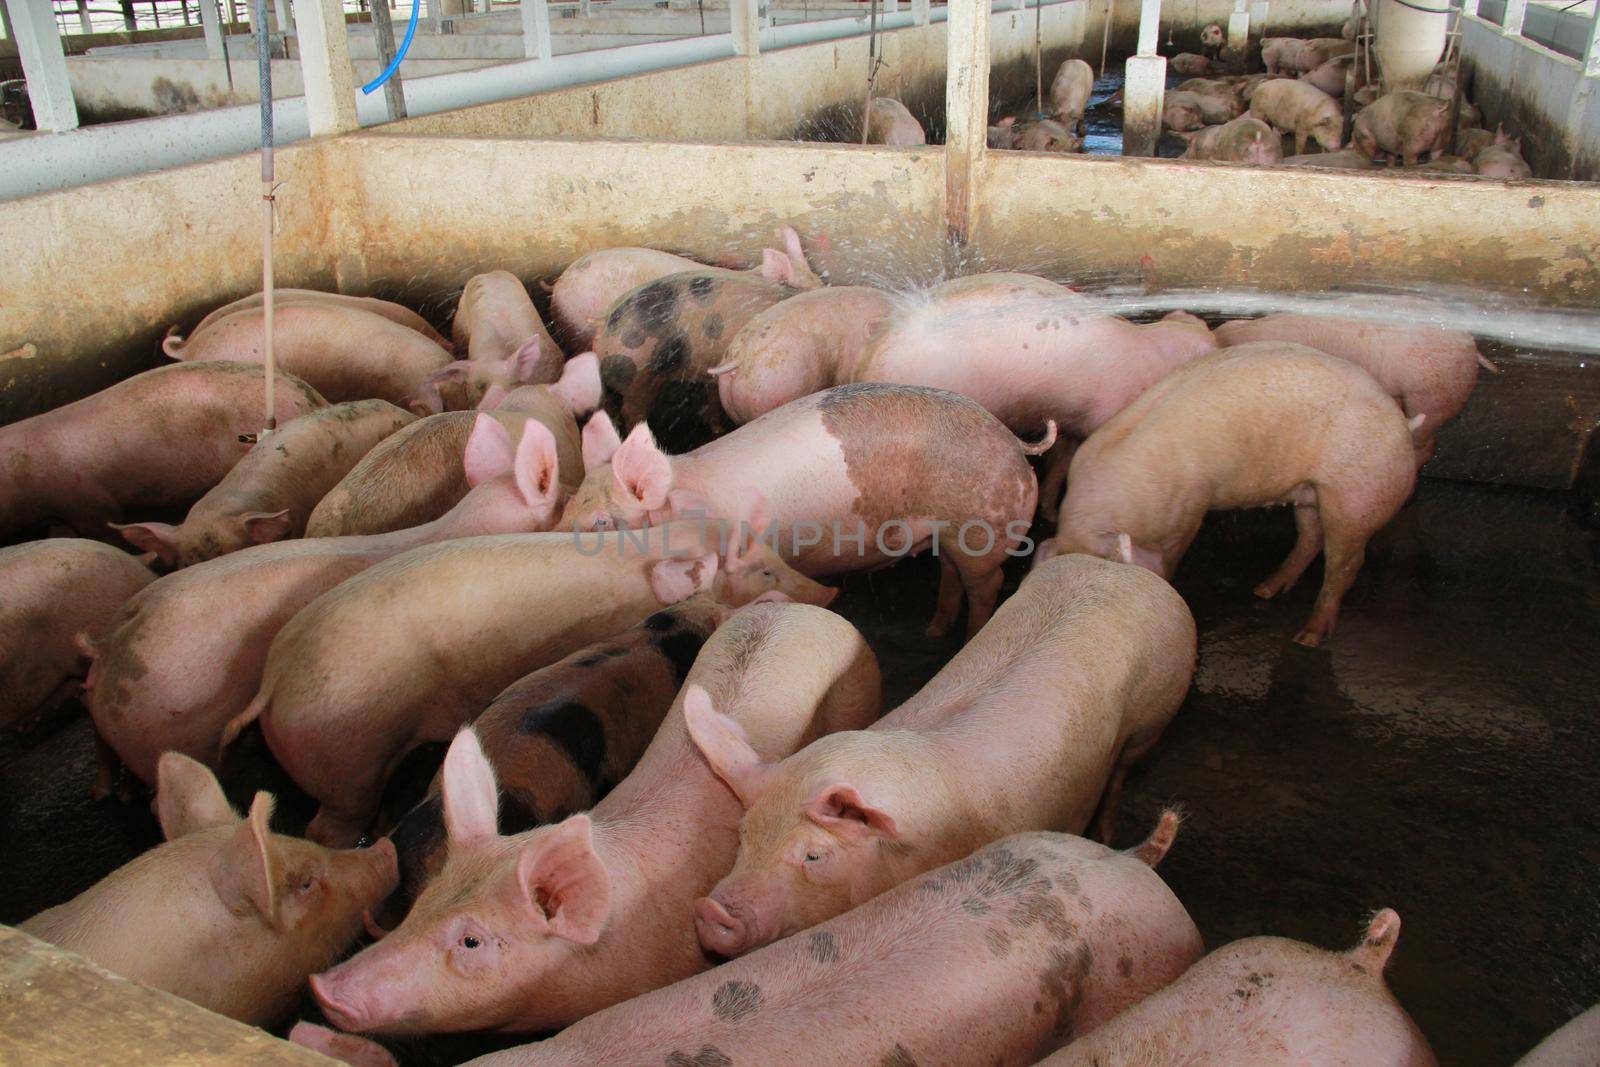 itabuna, bahia / brazil - june 15, 2012: Pig breeding farm in the city of Itabuna.